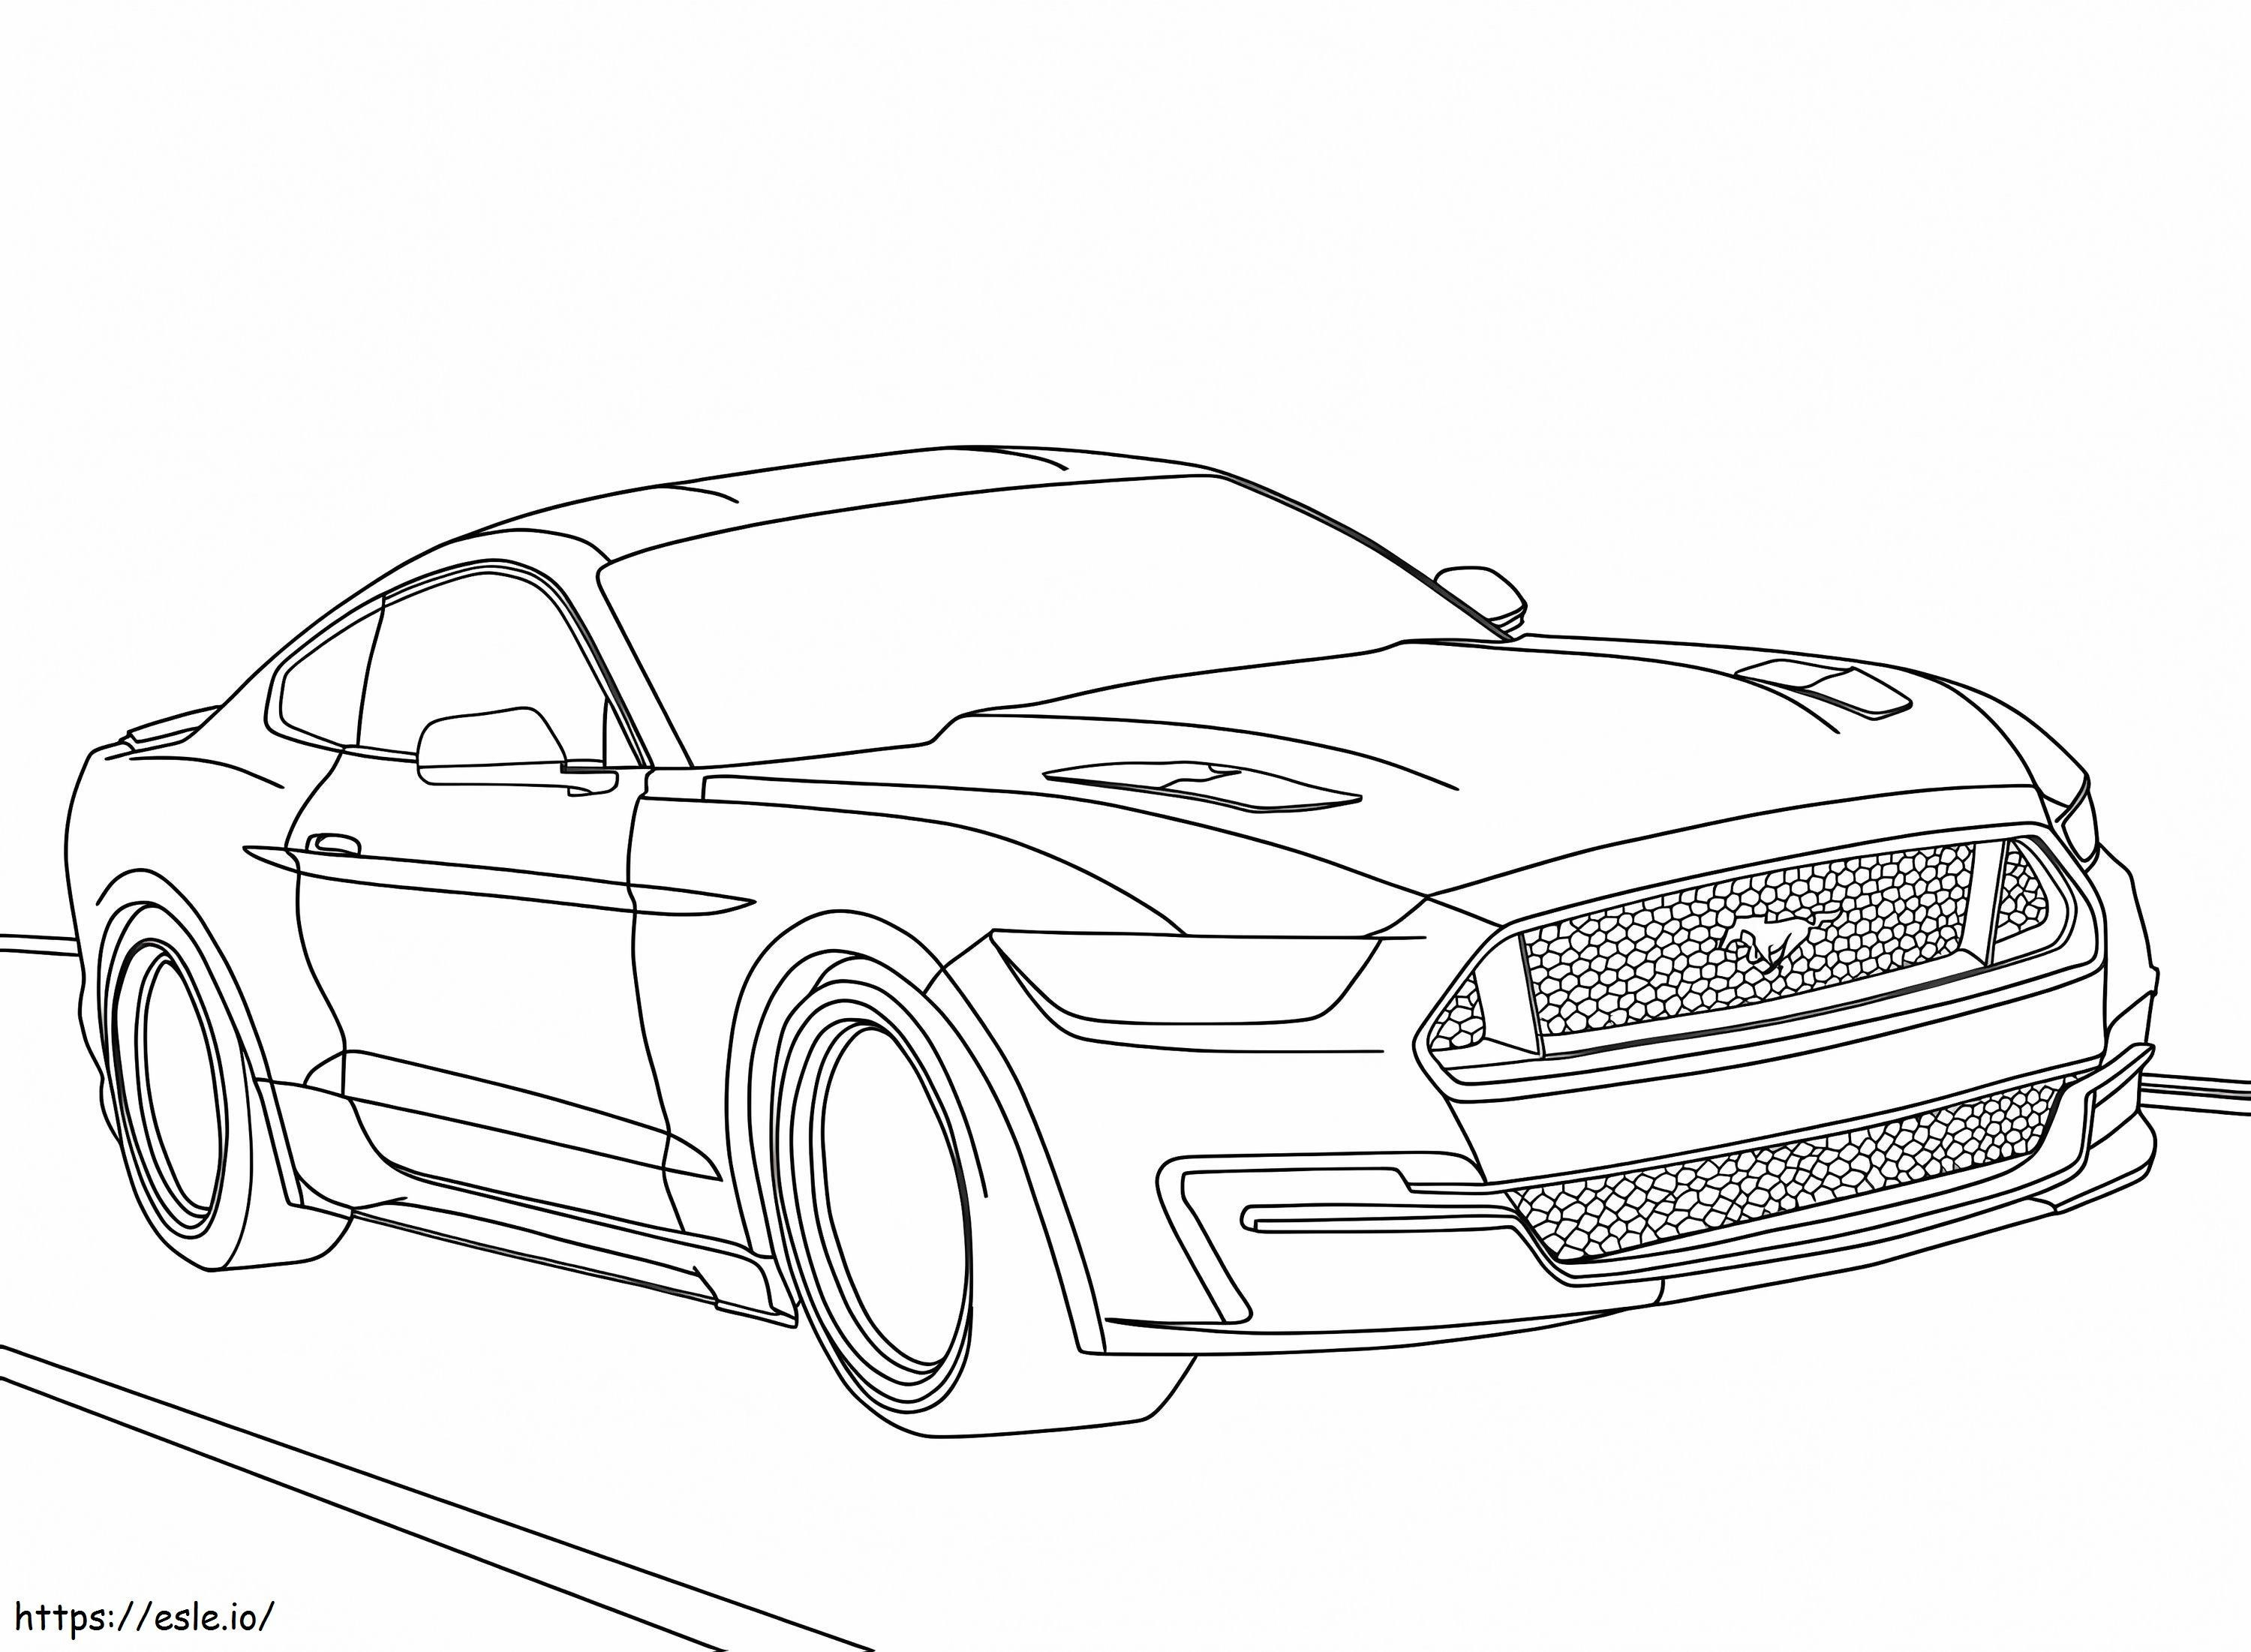 Coloriage Ford Mustang 2015 à imprimer dessin